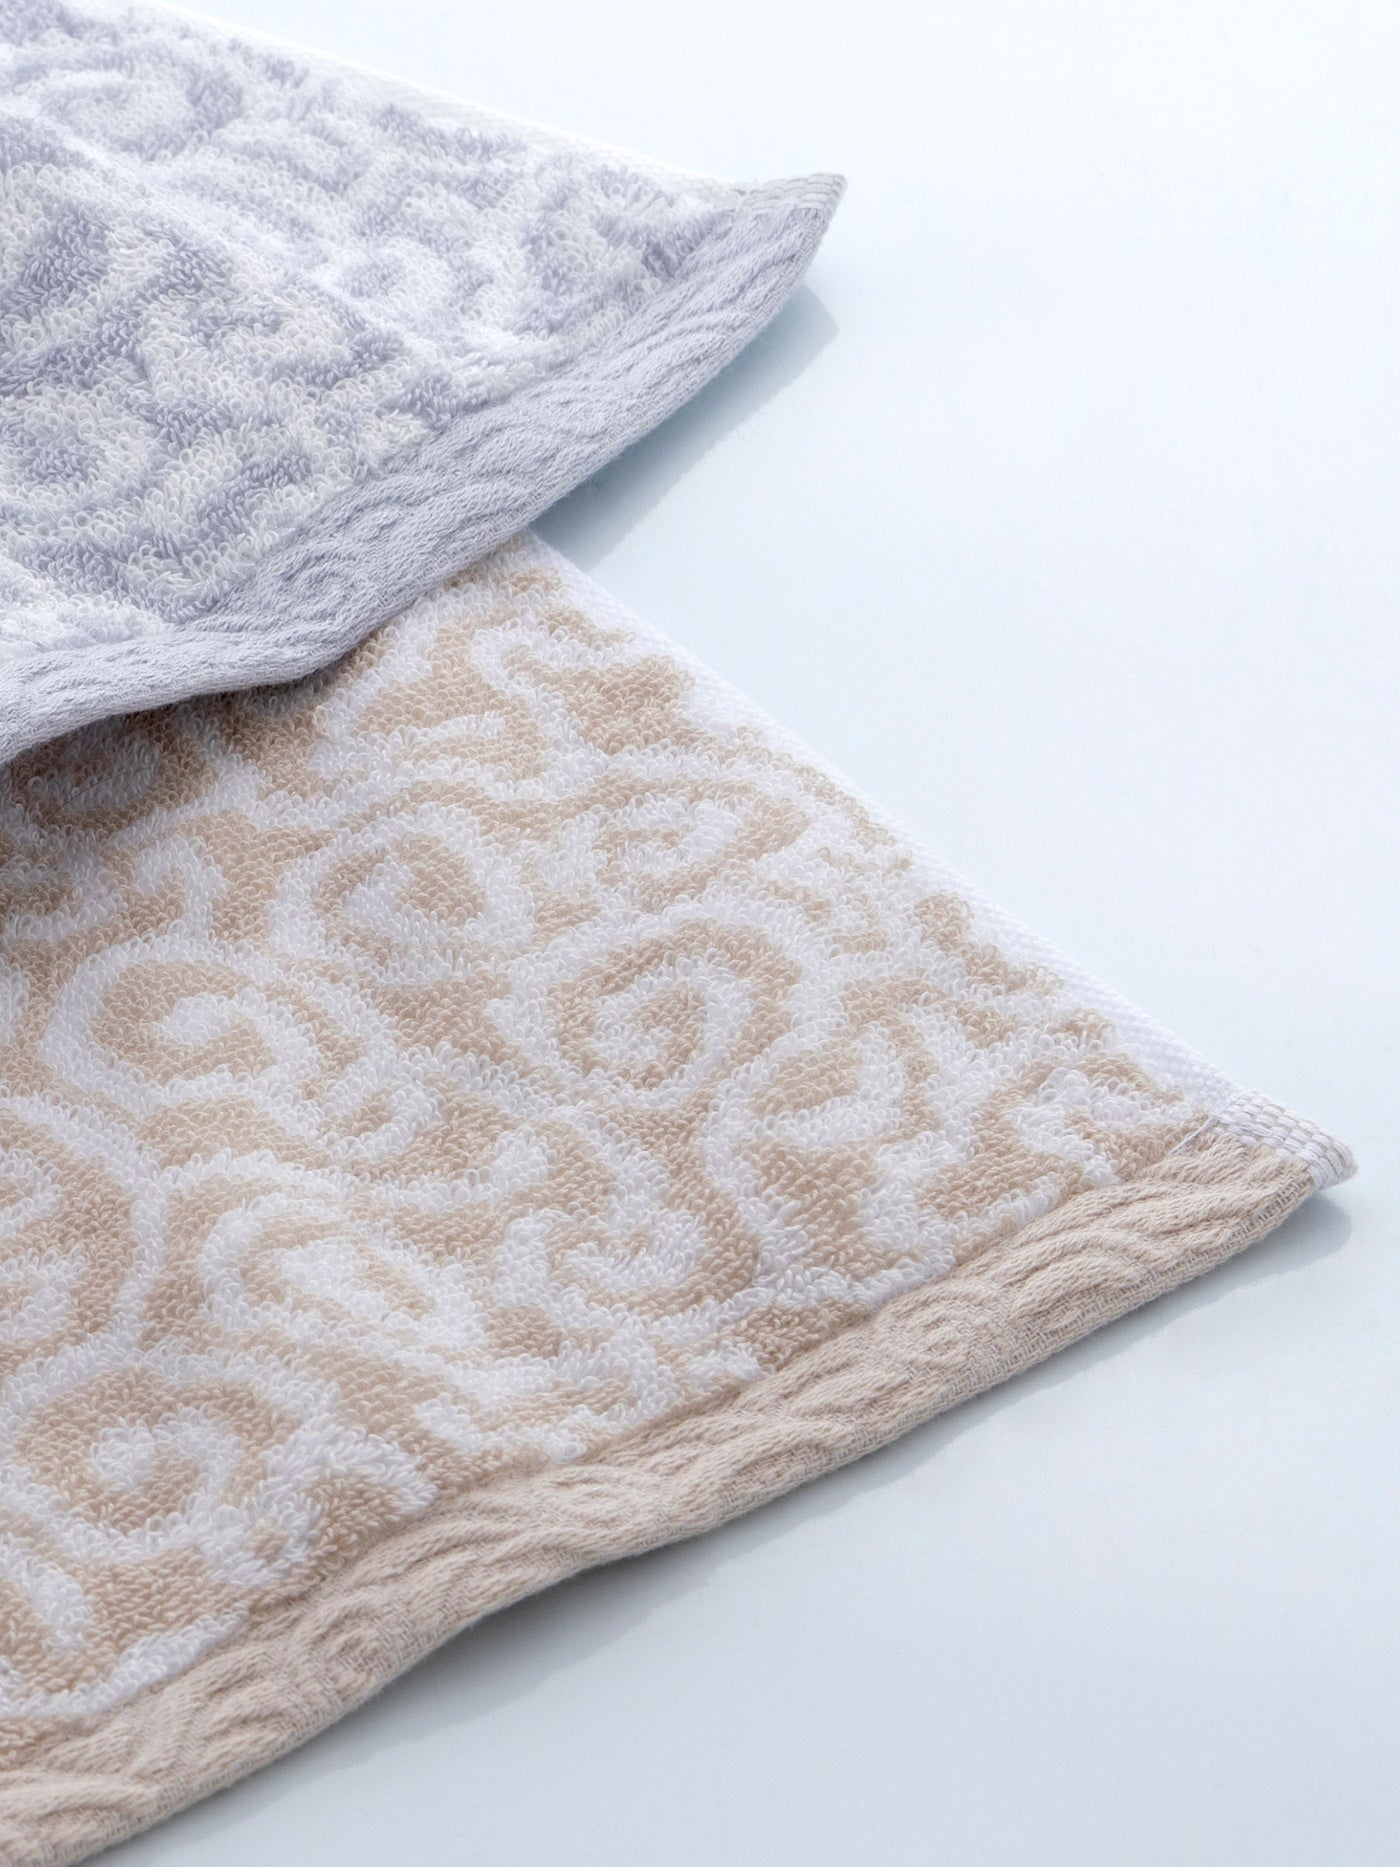 Monori Imabari Face Towel Set by Imabari Kinsei, Cream/Blue